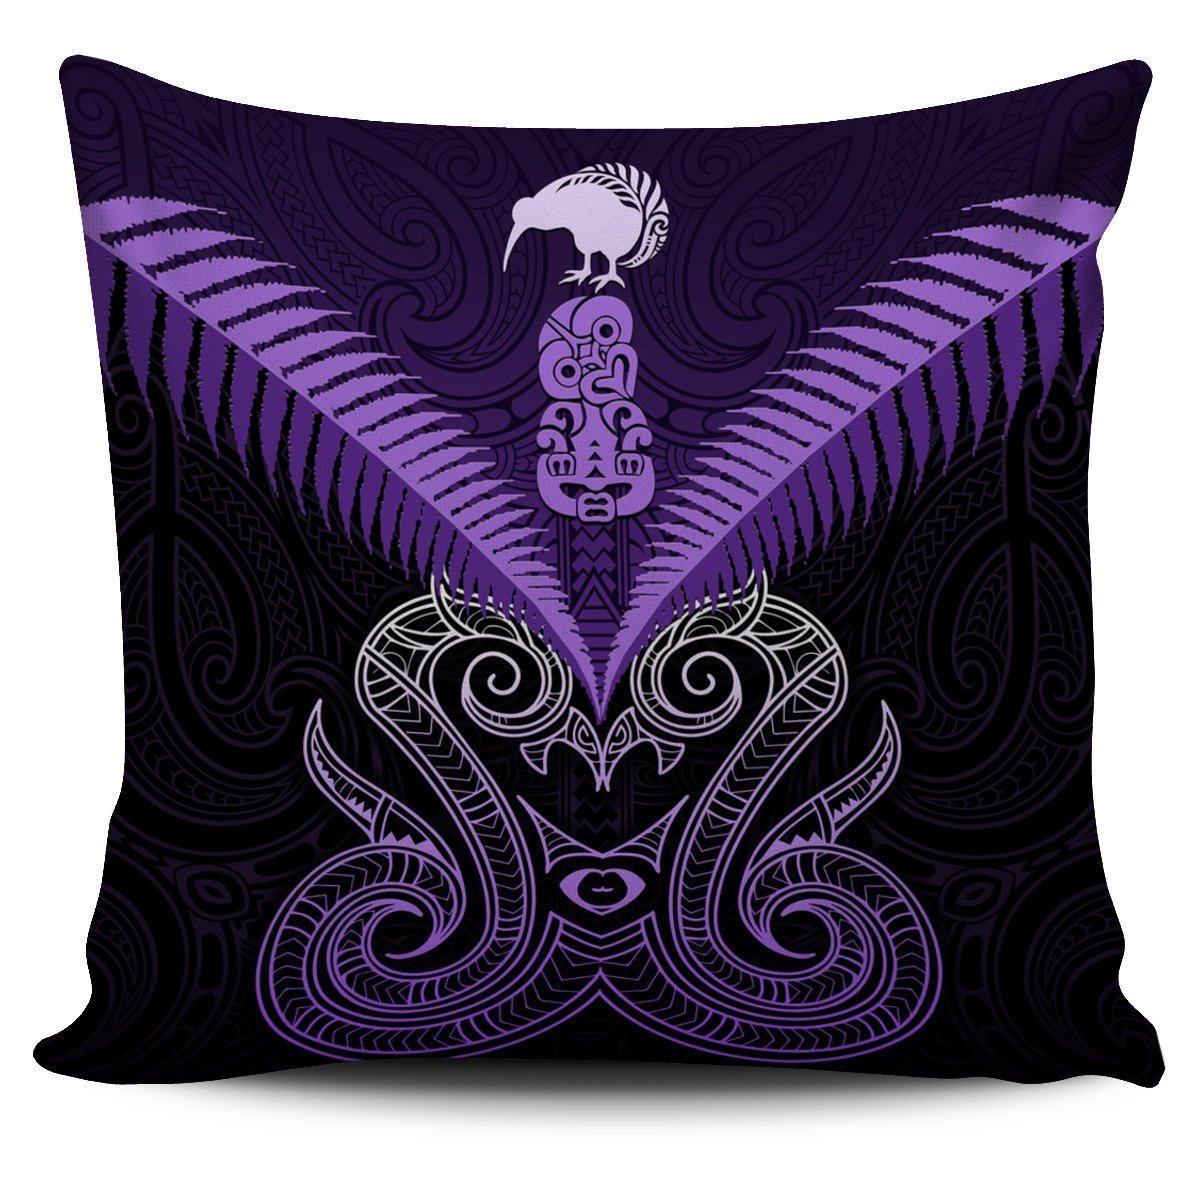 Maori Manaia New Zealand Pillow Cover Purple - Polynesian Pride